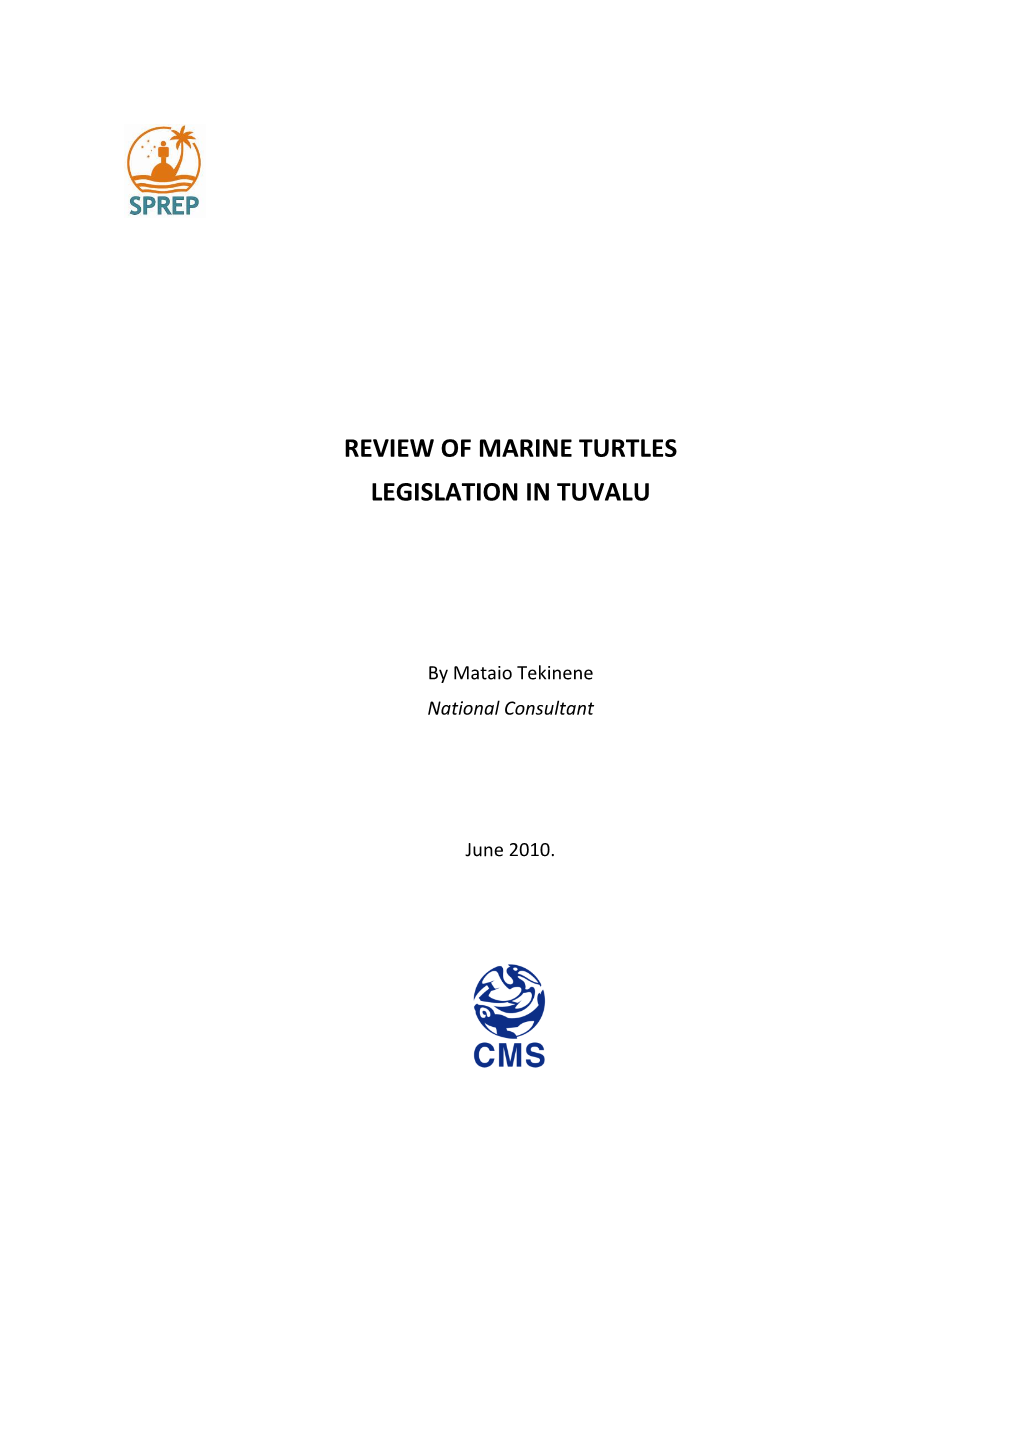 Review of Marine Turtles Legislation in Tuvalu